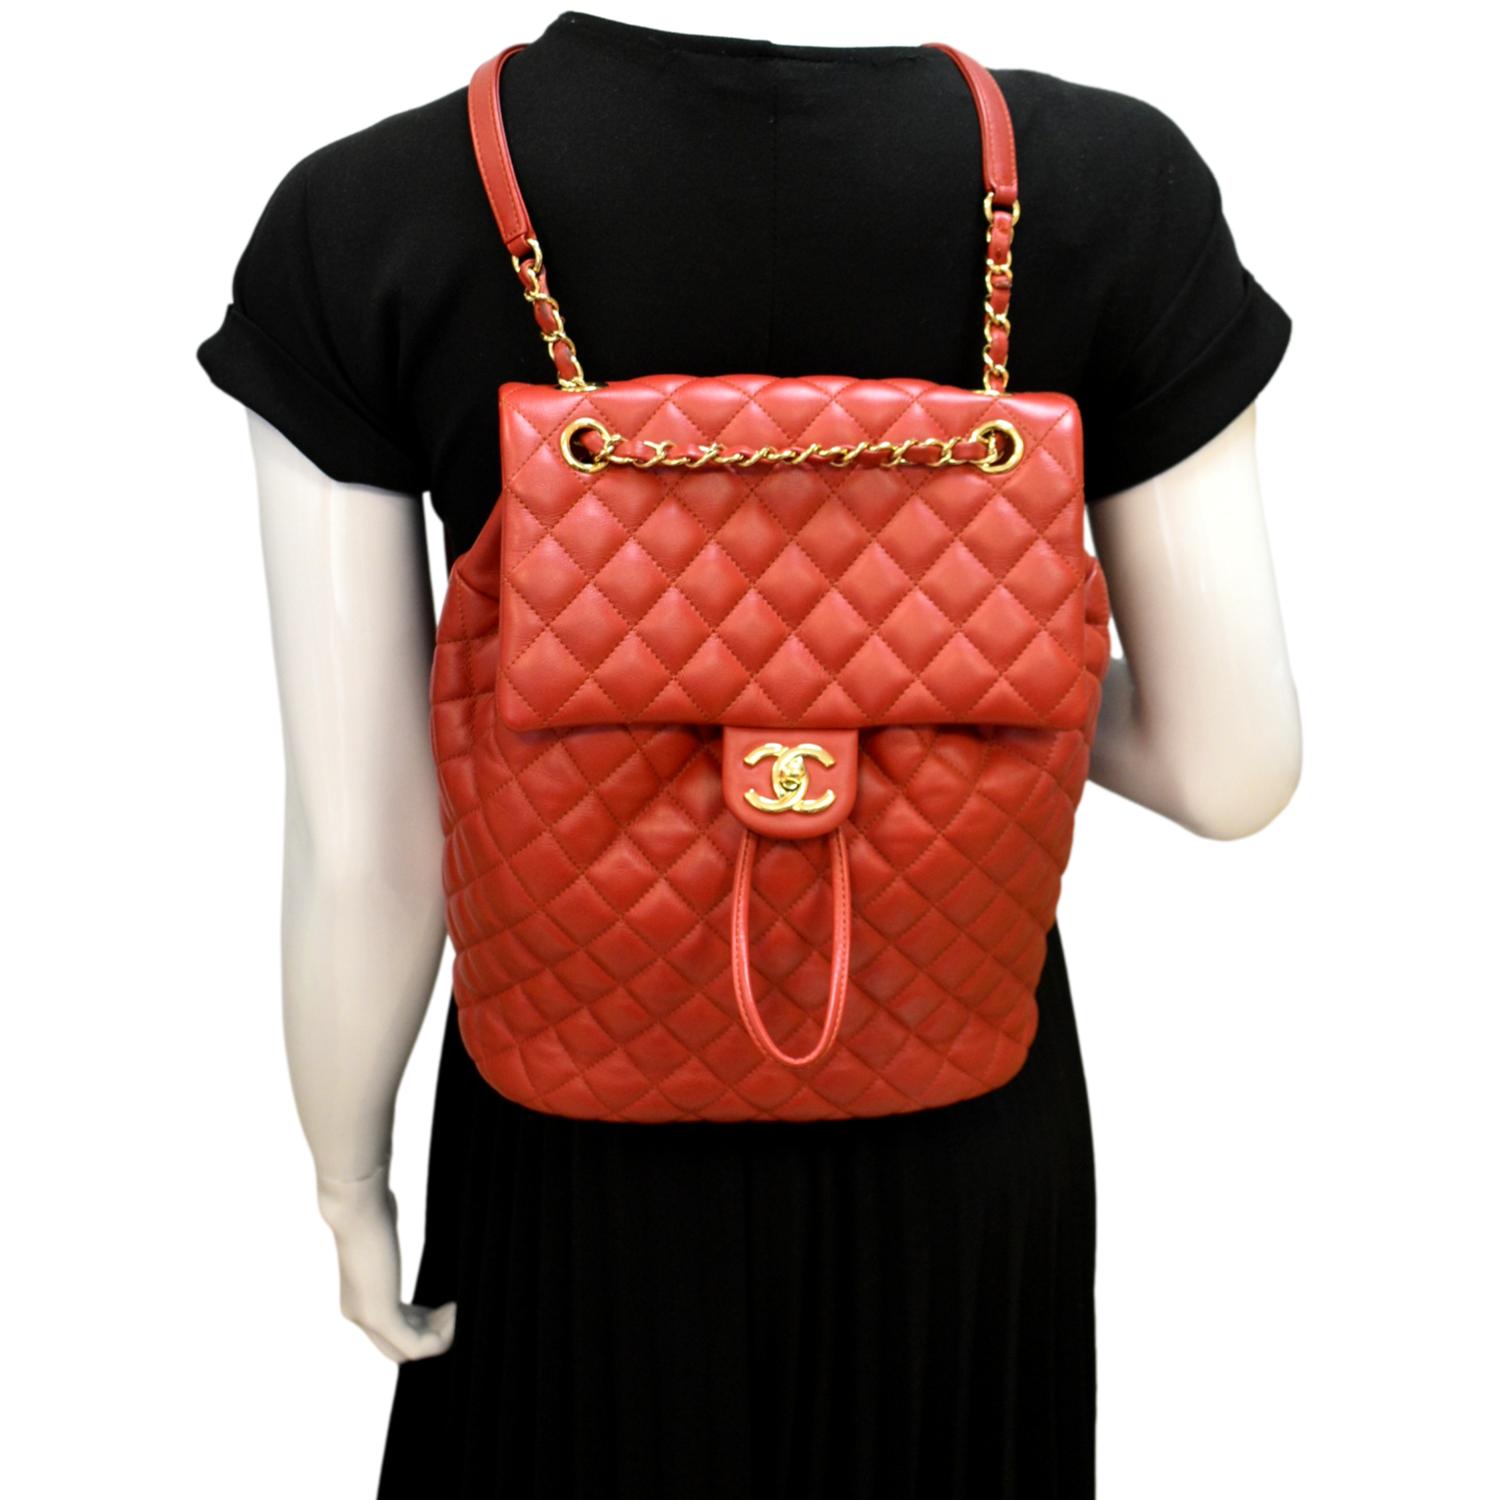 Shop CHANEL Casual Style Lambskin Backpacks by BrandConcierge